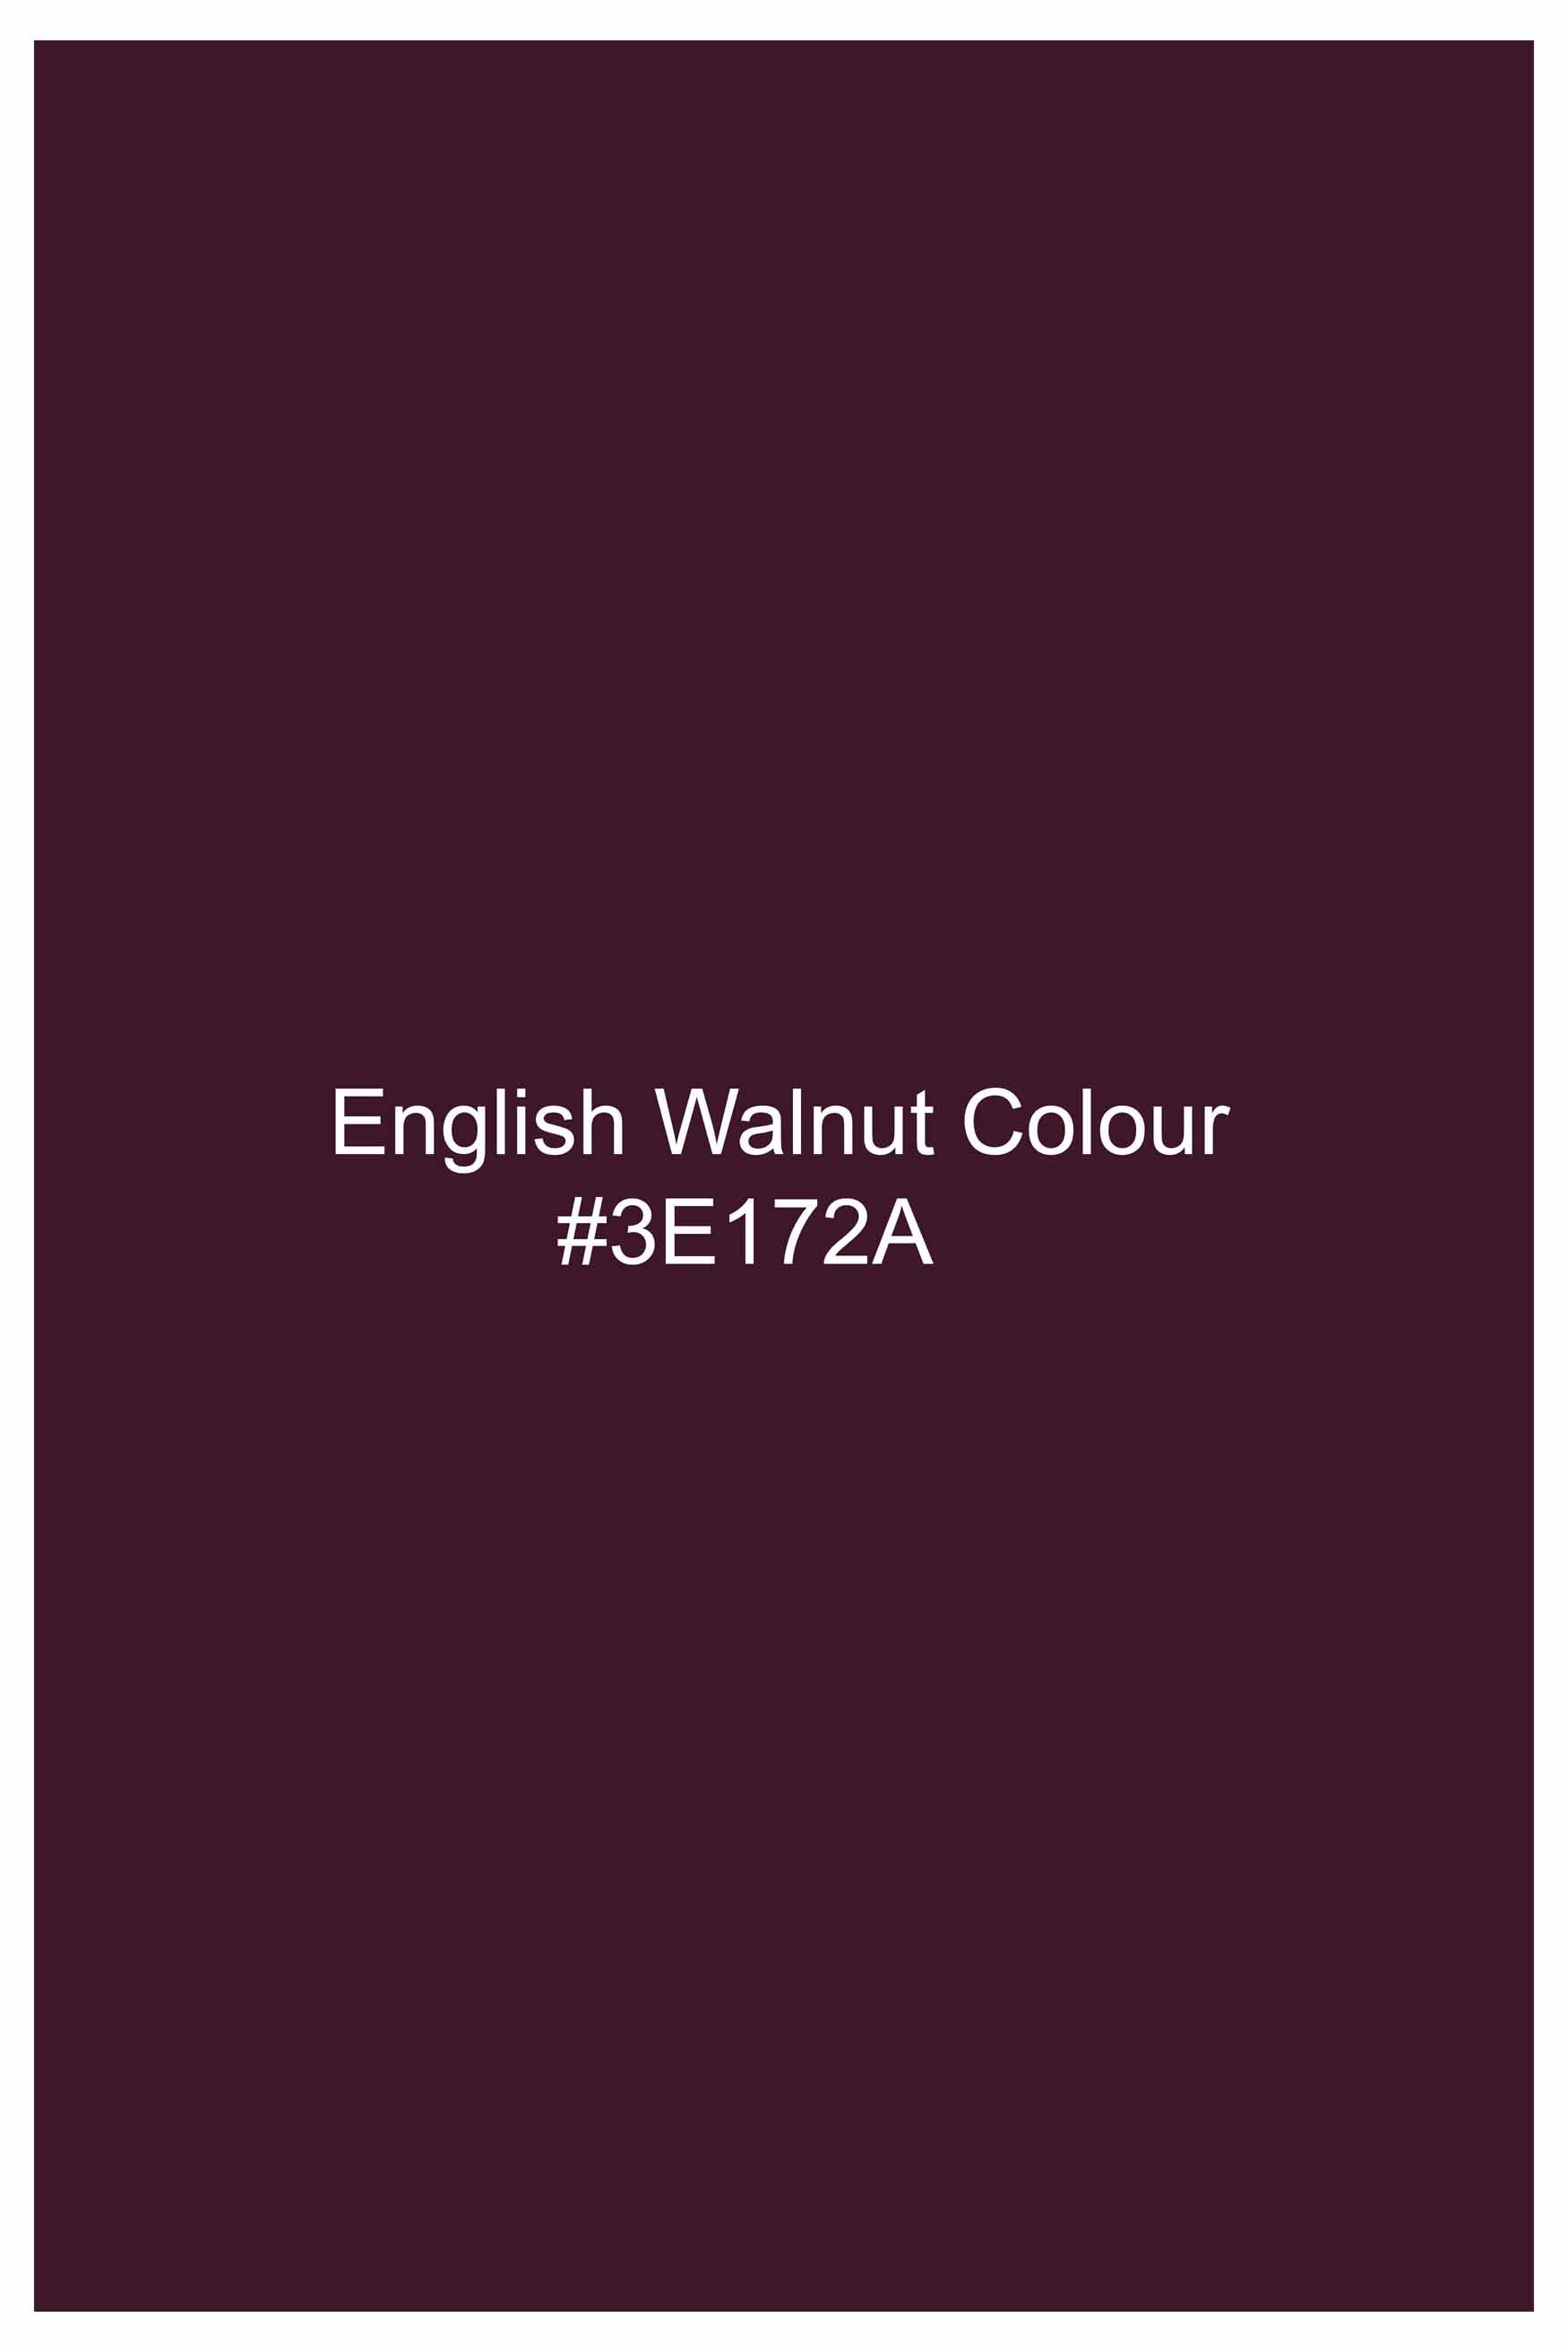 English Walnut Maroon Premium Cotton Shirt